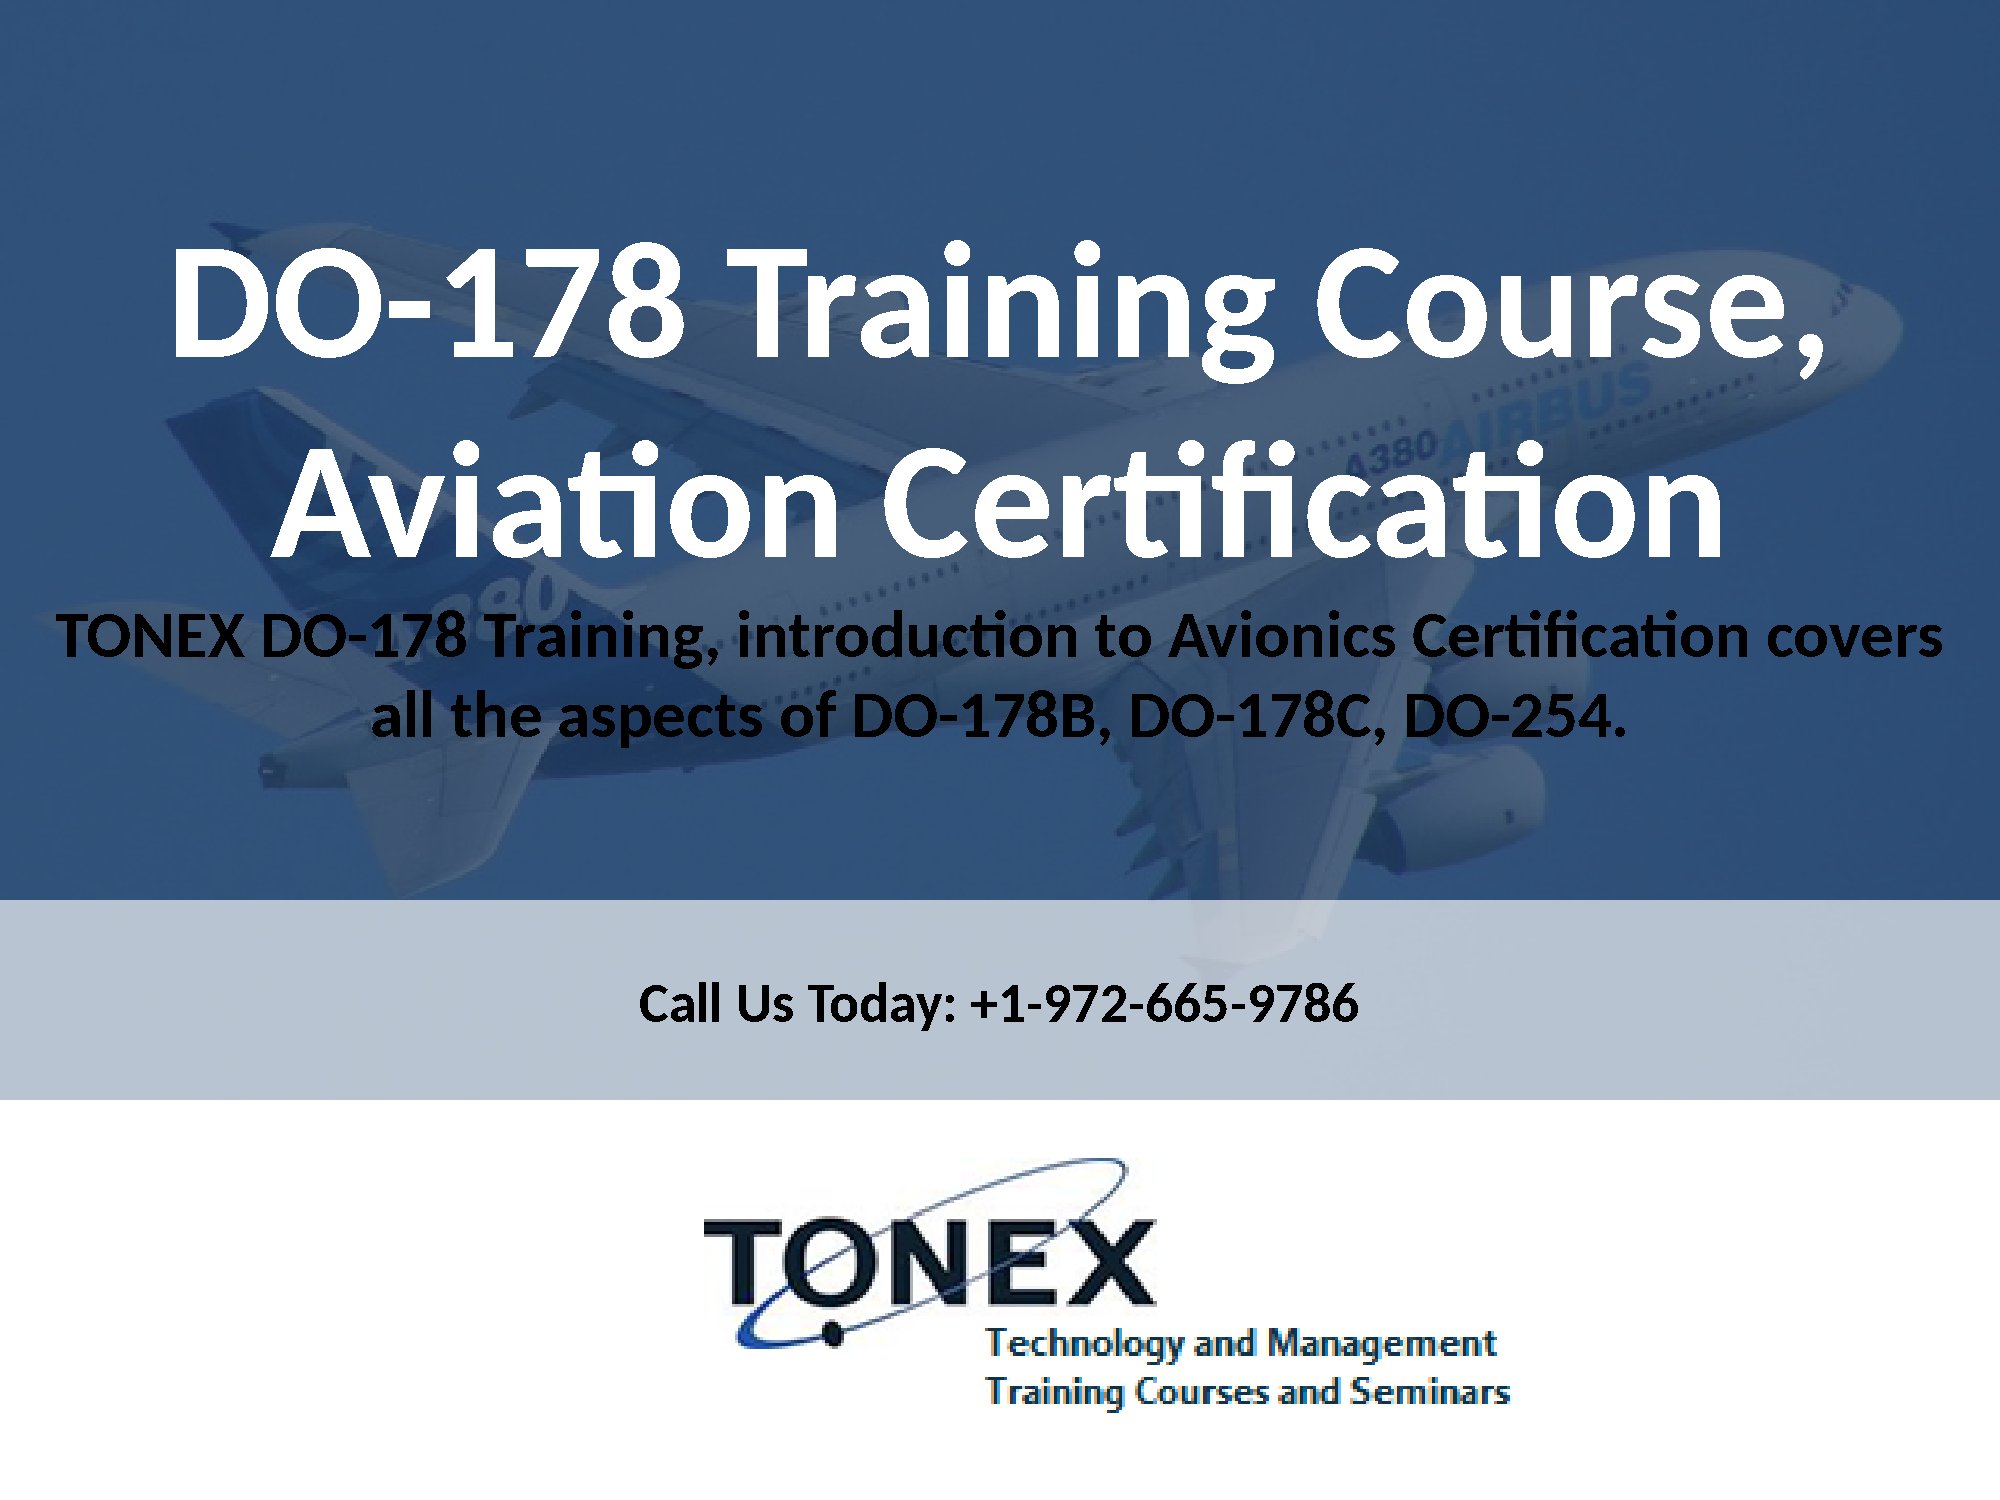 DO-178 Training Course, Aviation Certification